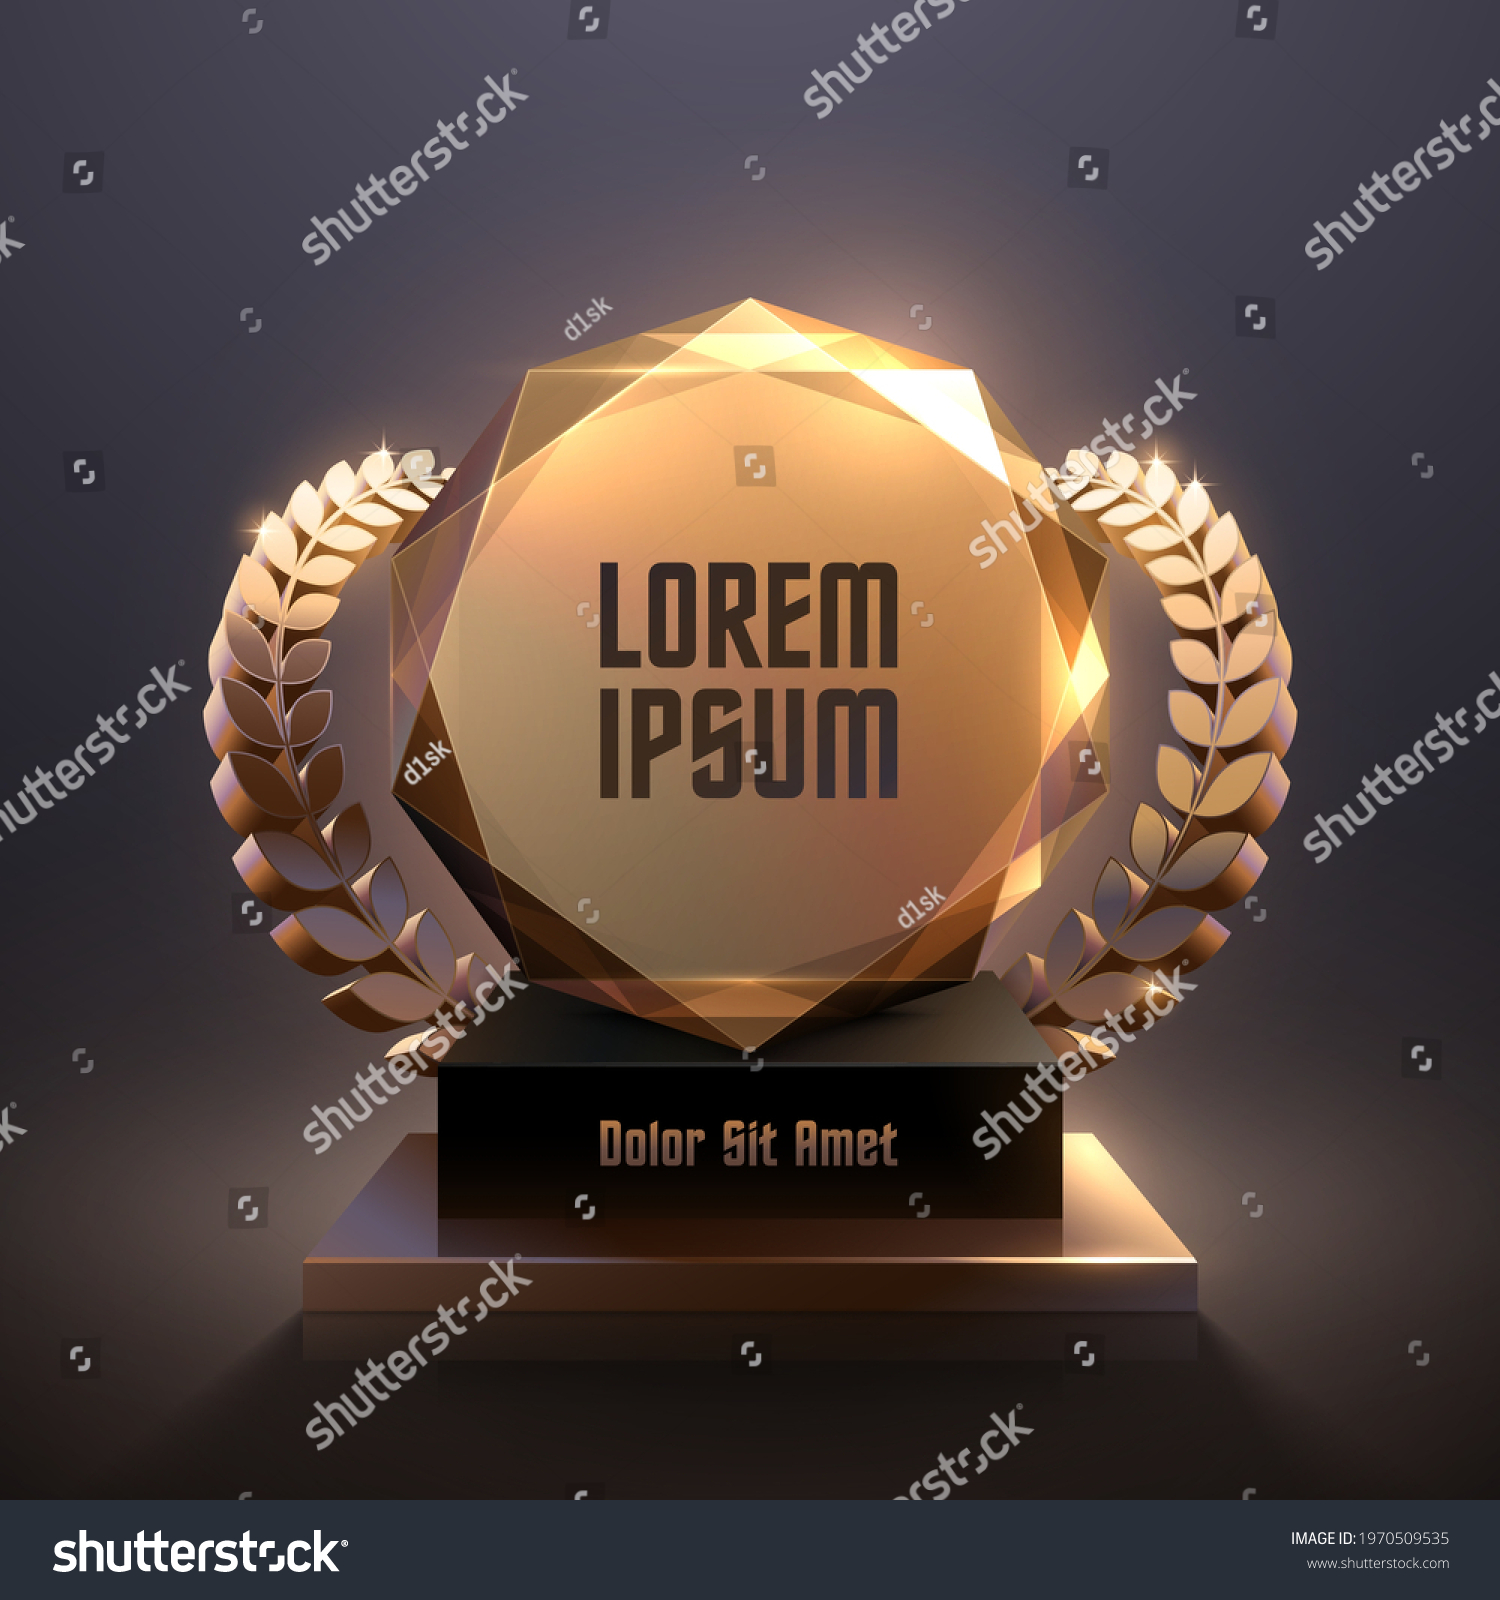 Geometric gold award with laurel wreath #1970509535